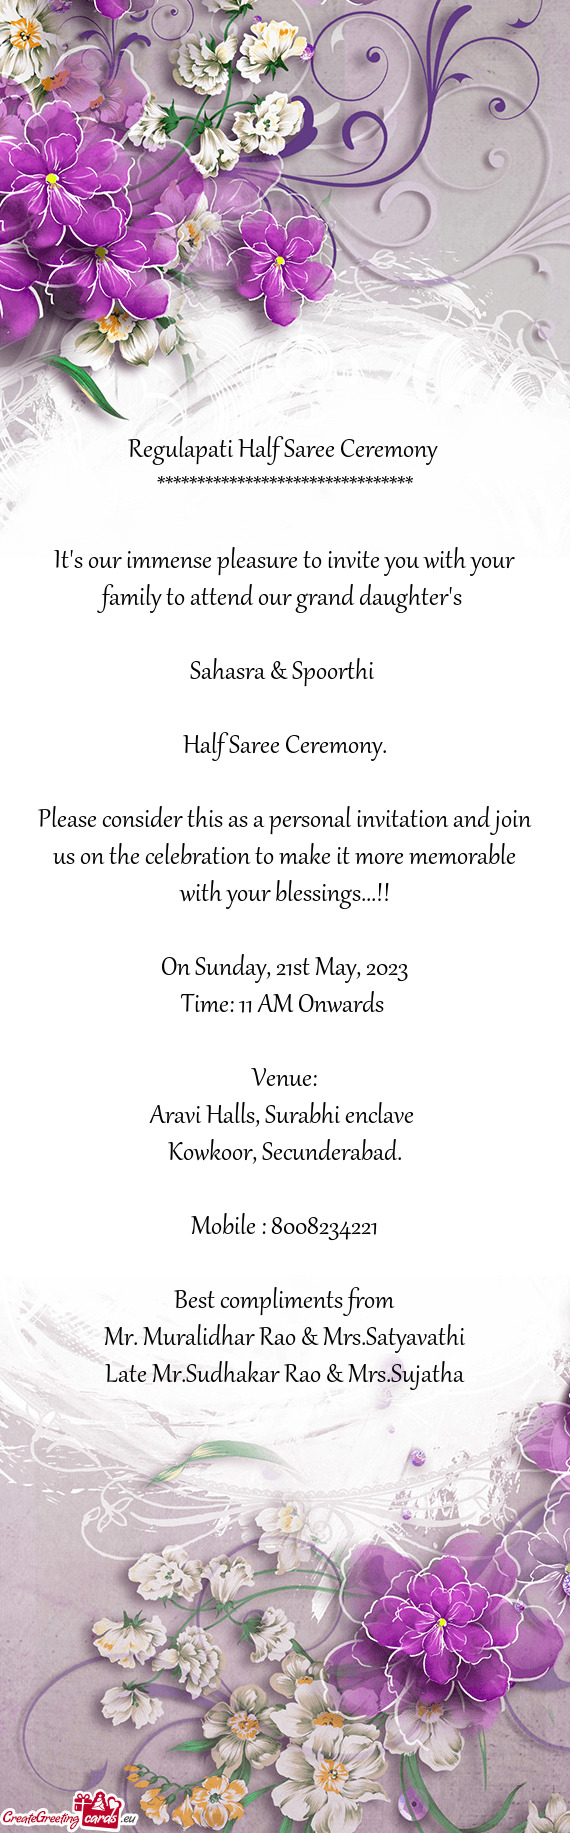 Regulapati Half Saree Ceremony